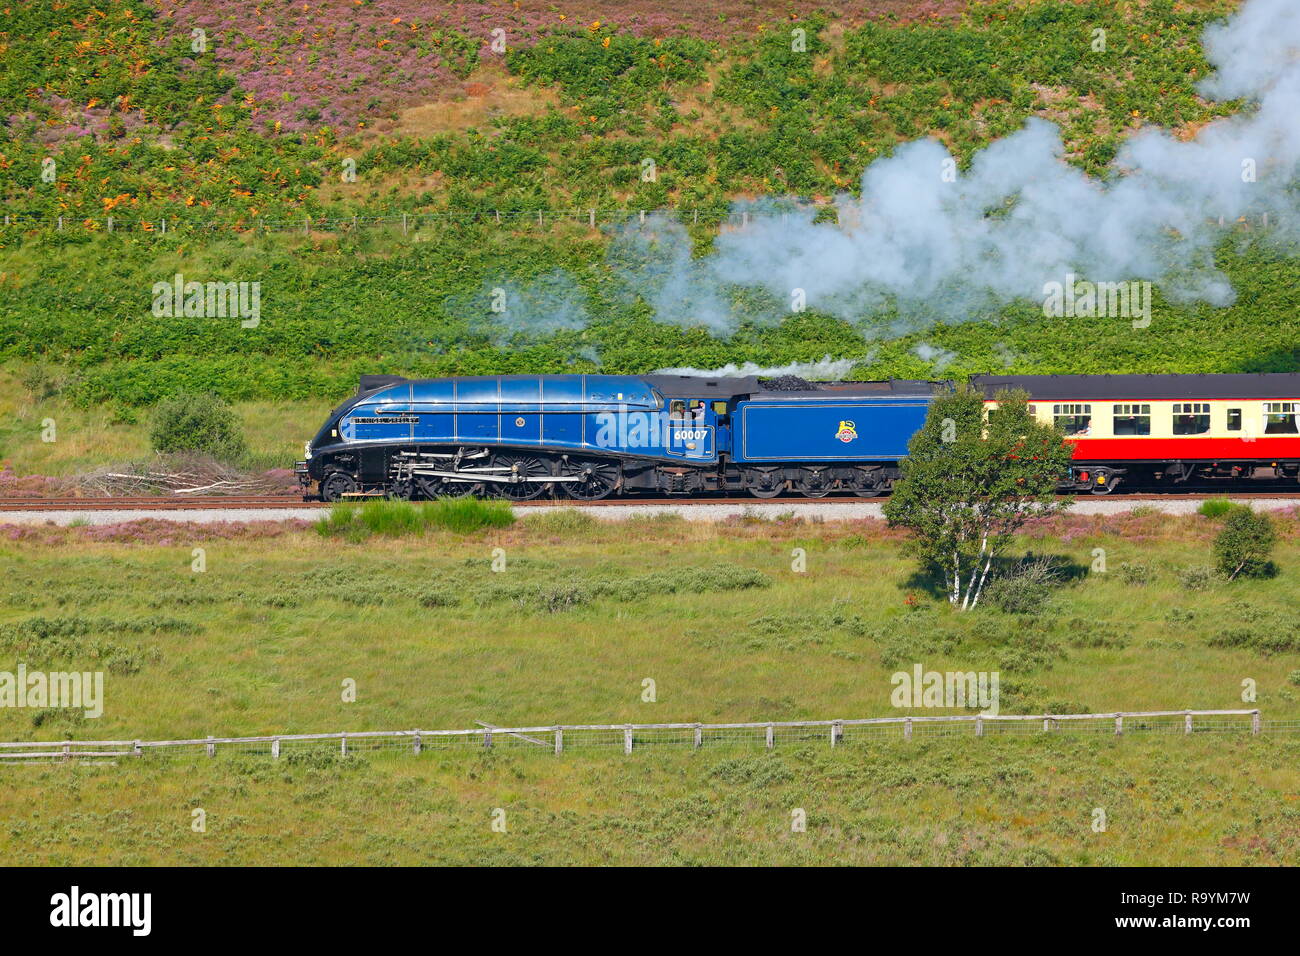 60007 Sir Nigel Gresley Dampflok auf der North Yorkshire Moors Railway in Goathland. Stockfoto